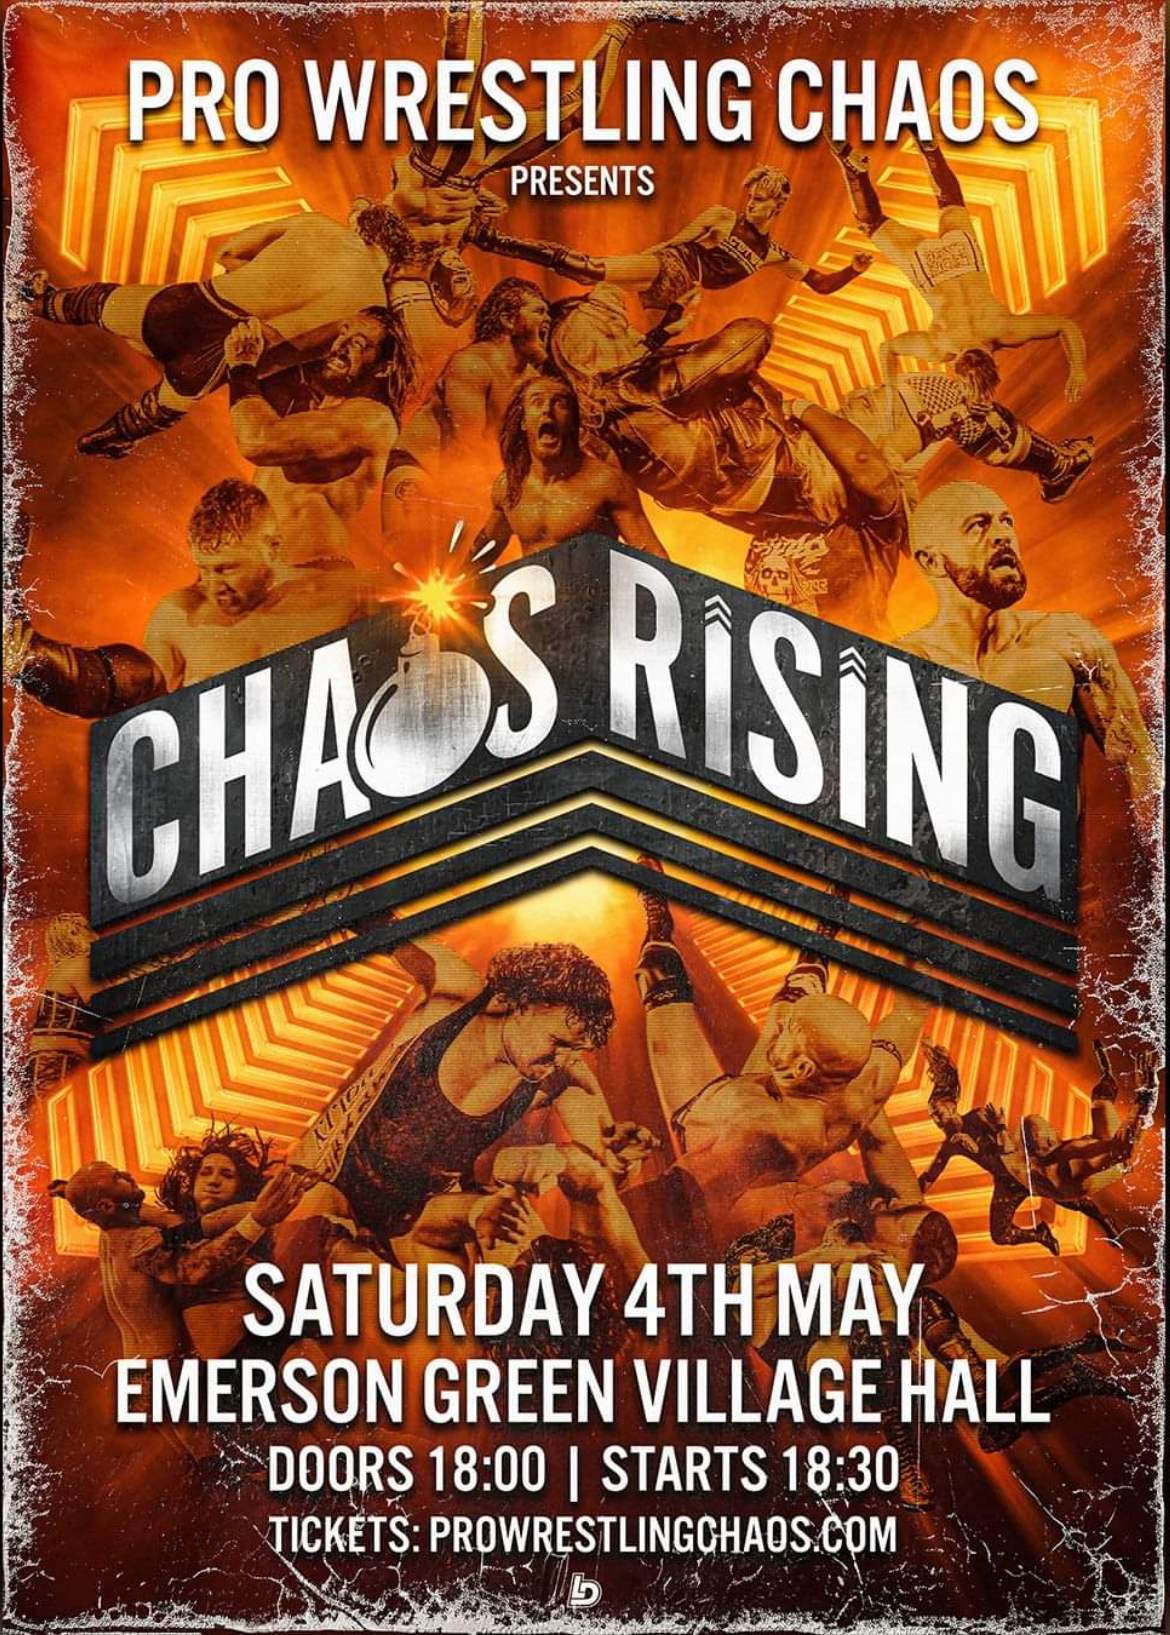 Pro Wrestling Chaos - Chaos Rising event description image